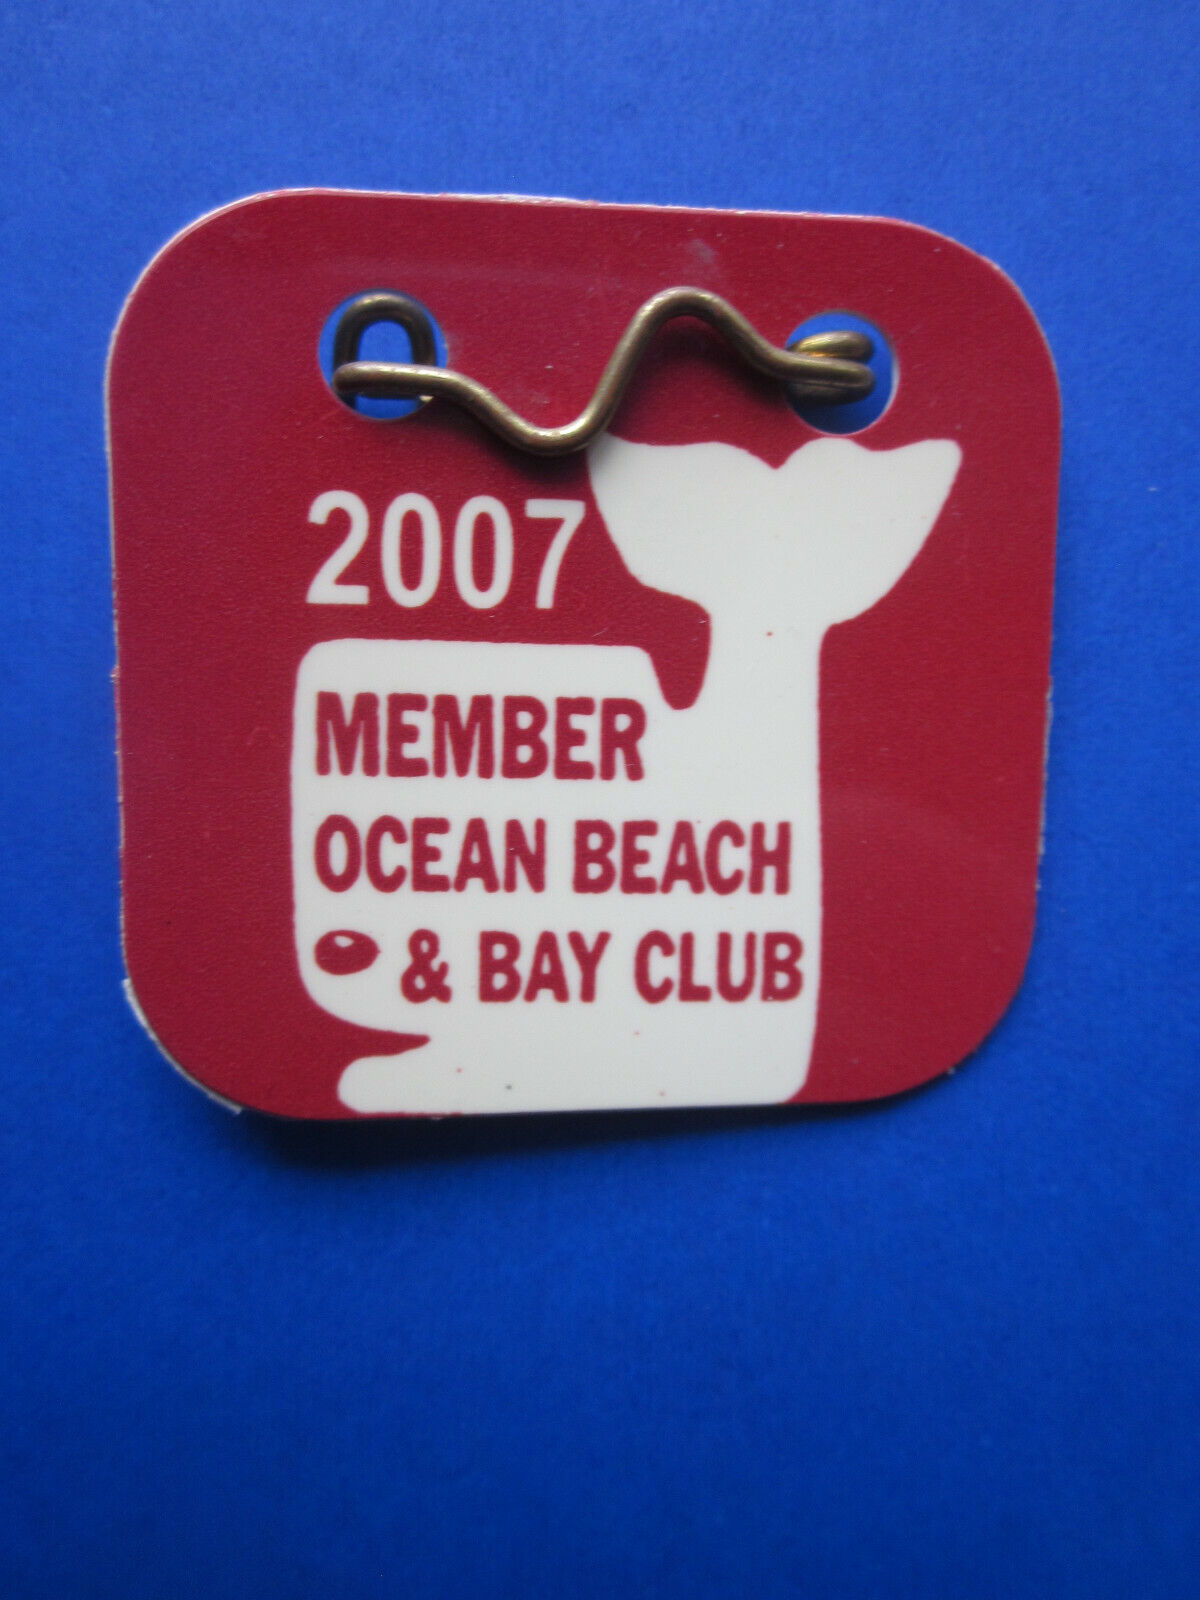 2007  OCEAN  BEACH  NEW  JERSEY  SEASONAL  BEACH  BADGES/TAGS   17  YEARS  OLD